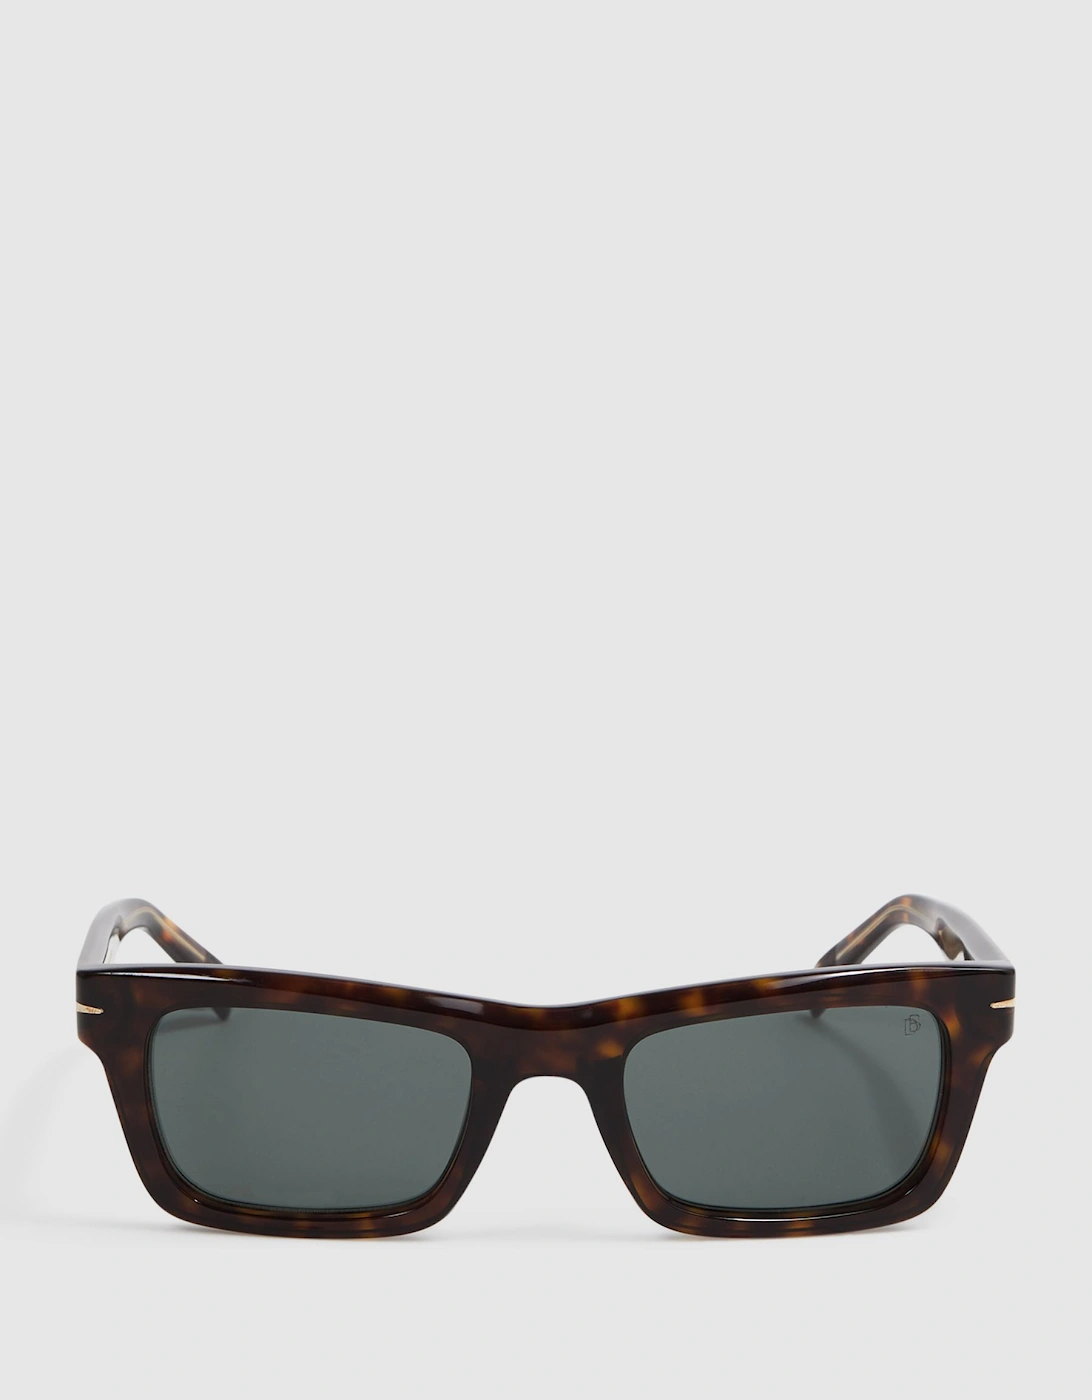 Eyewear by David Beckham Rectangular Sunglasses, 2 of 1